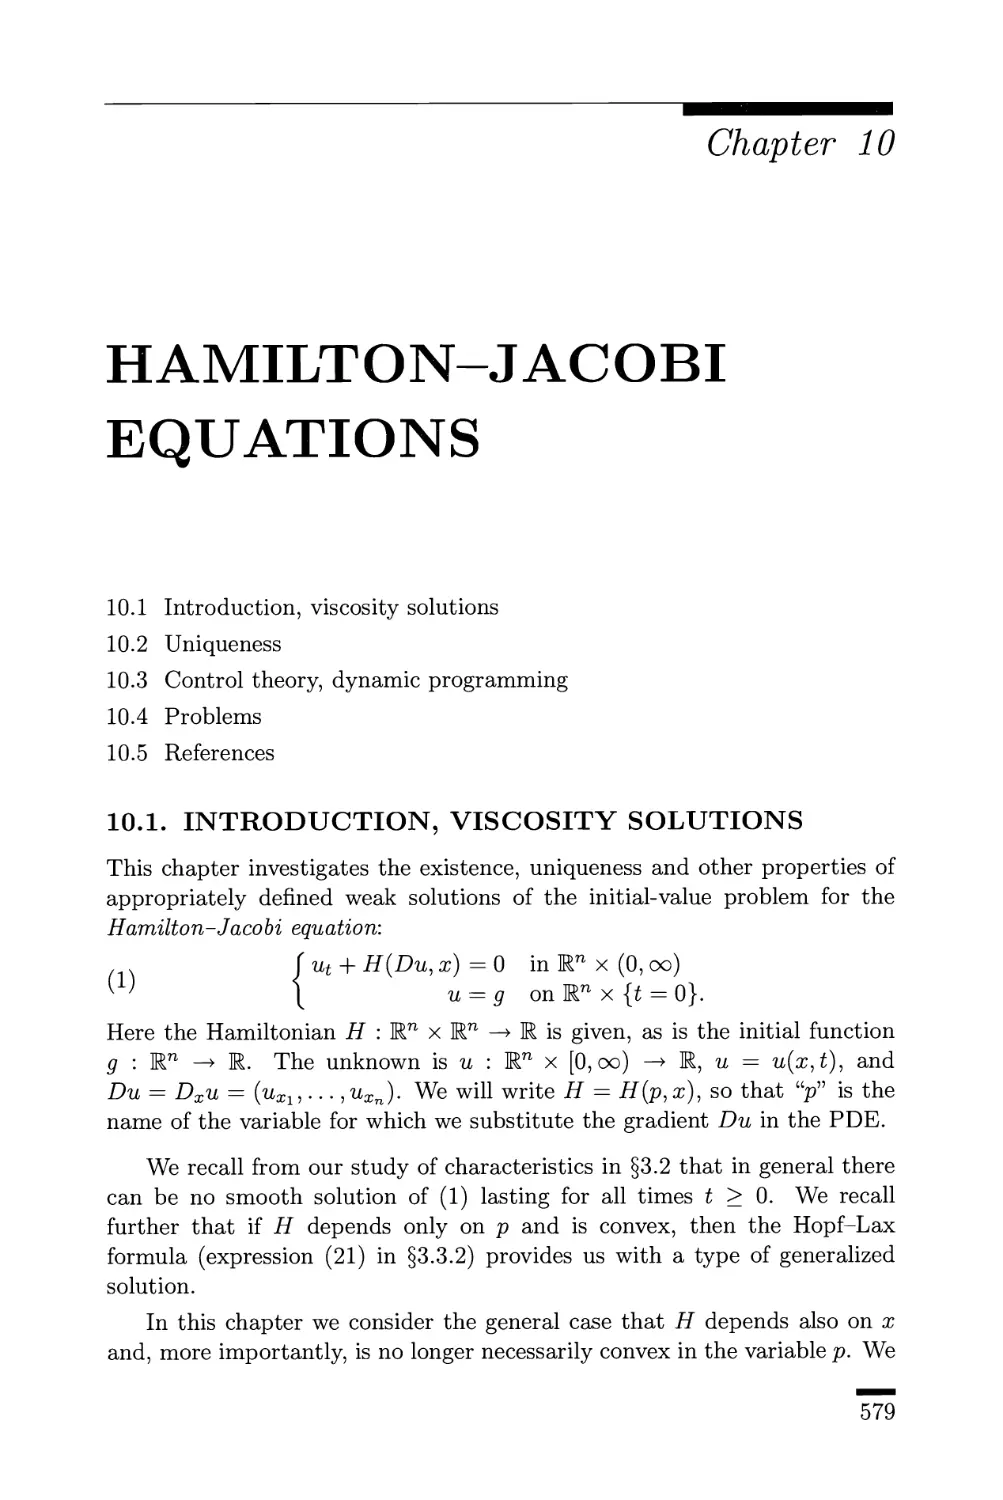 10. Hamilton-Jacobi Equations